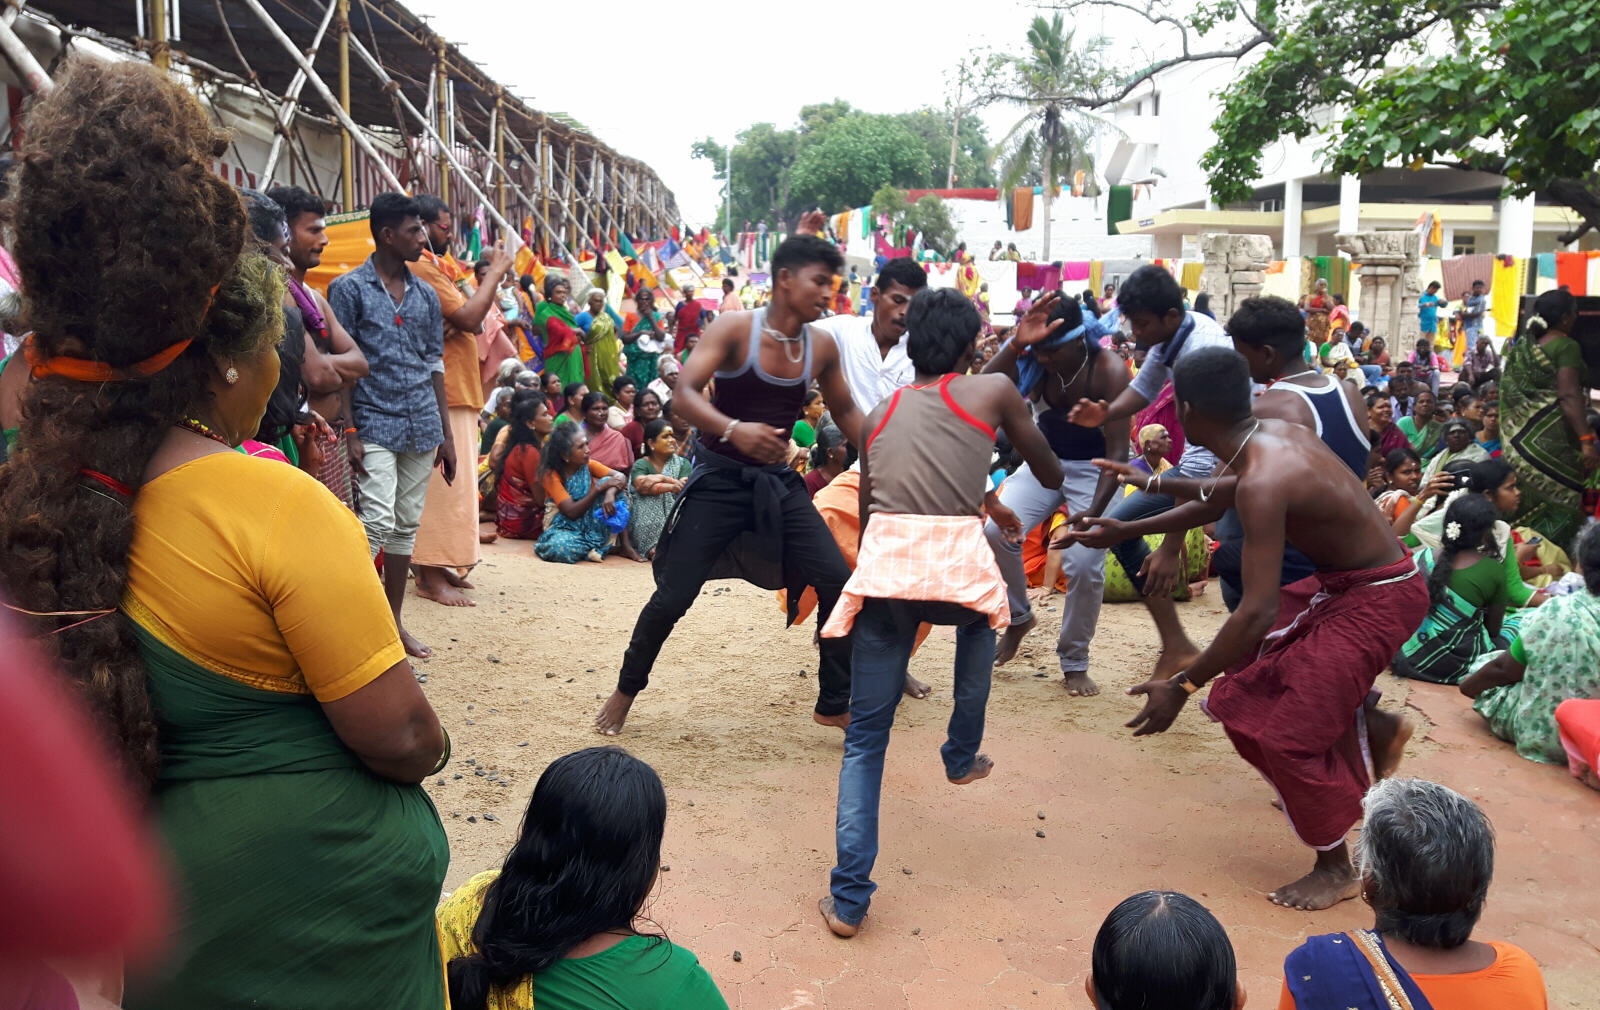 Pilgrims dancing at Tiruchendur shore temple, India